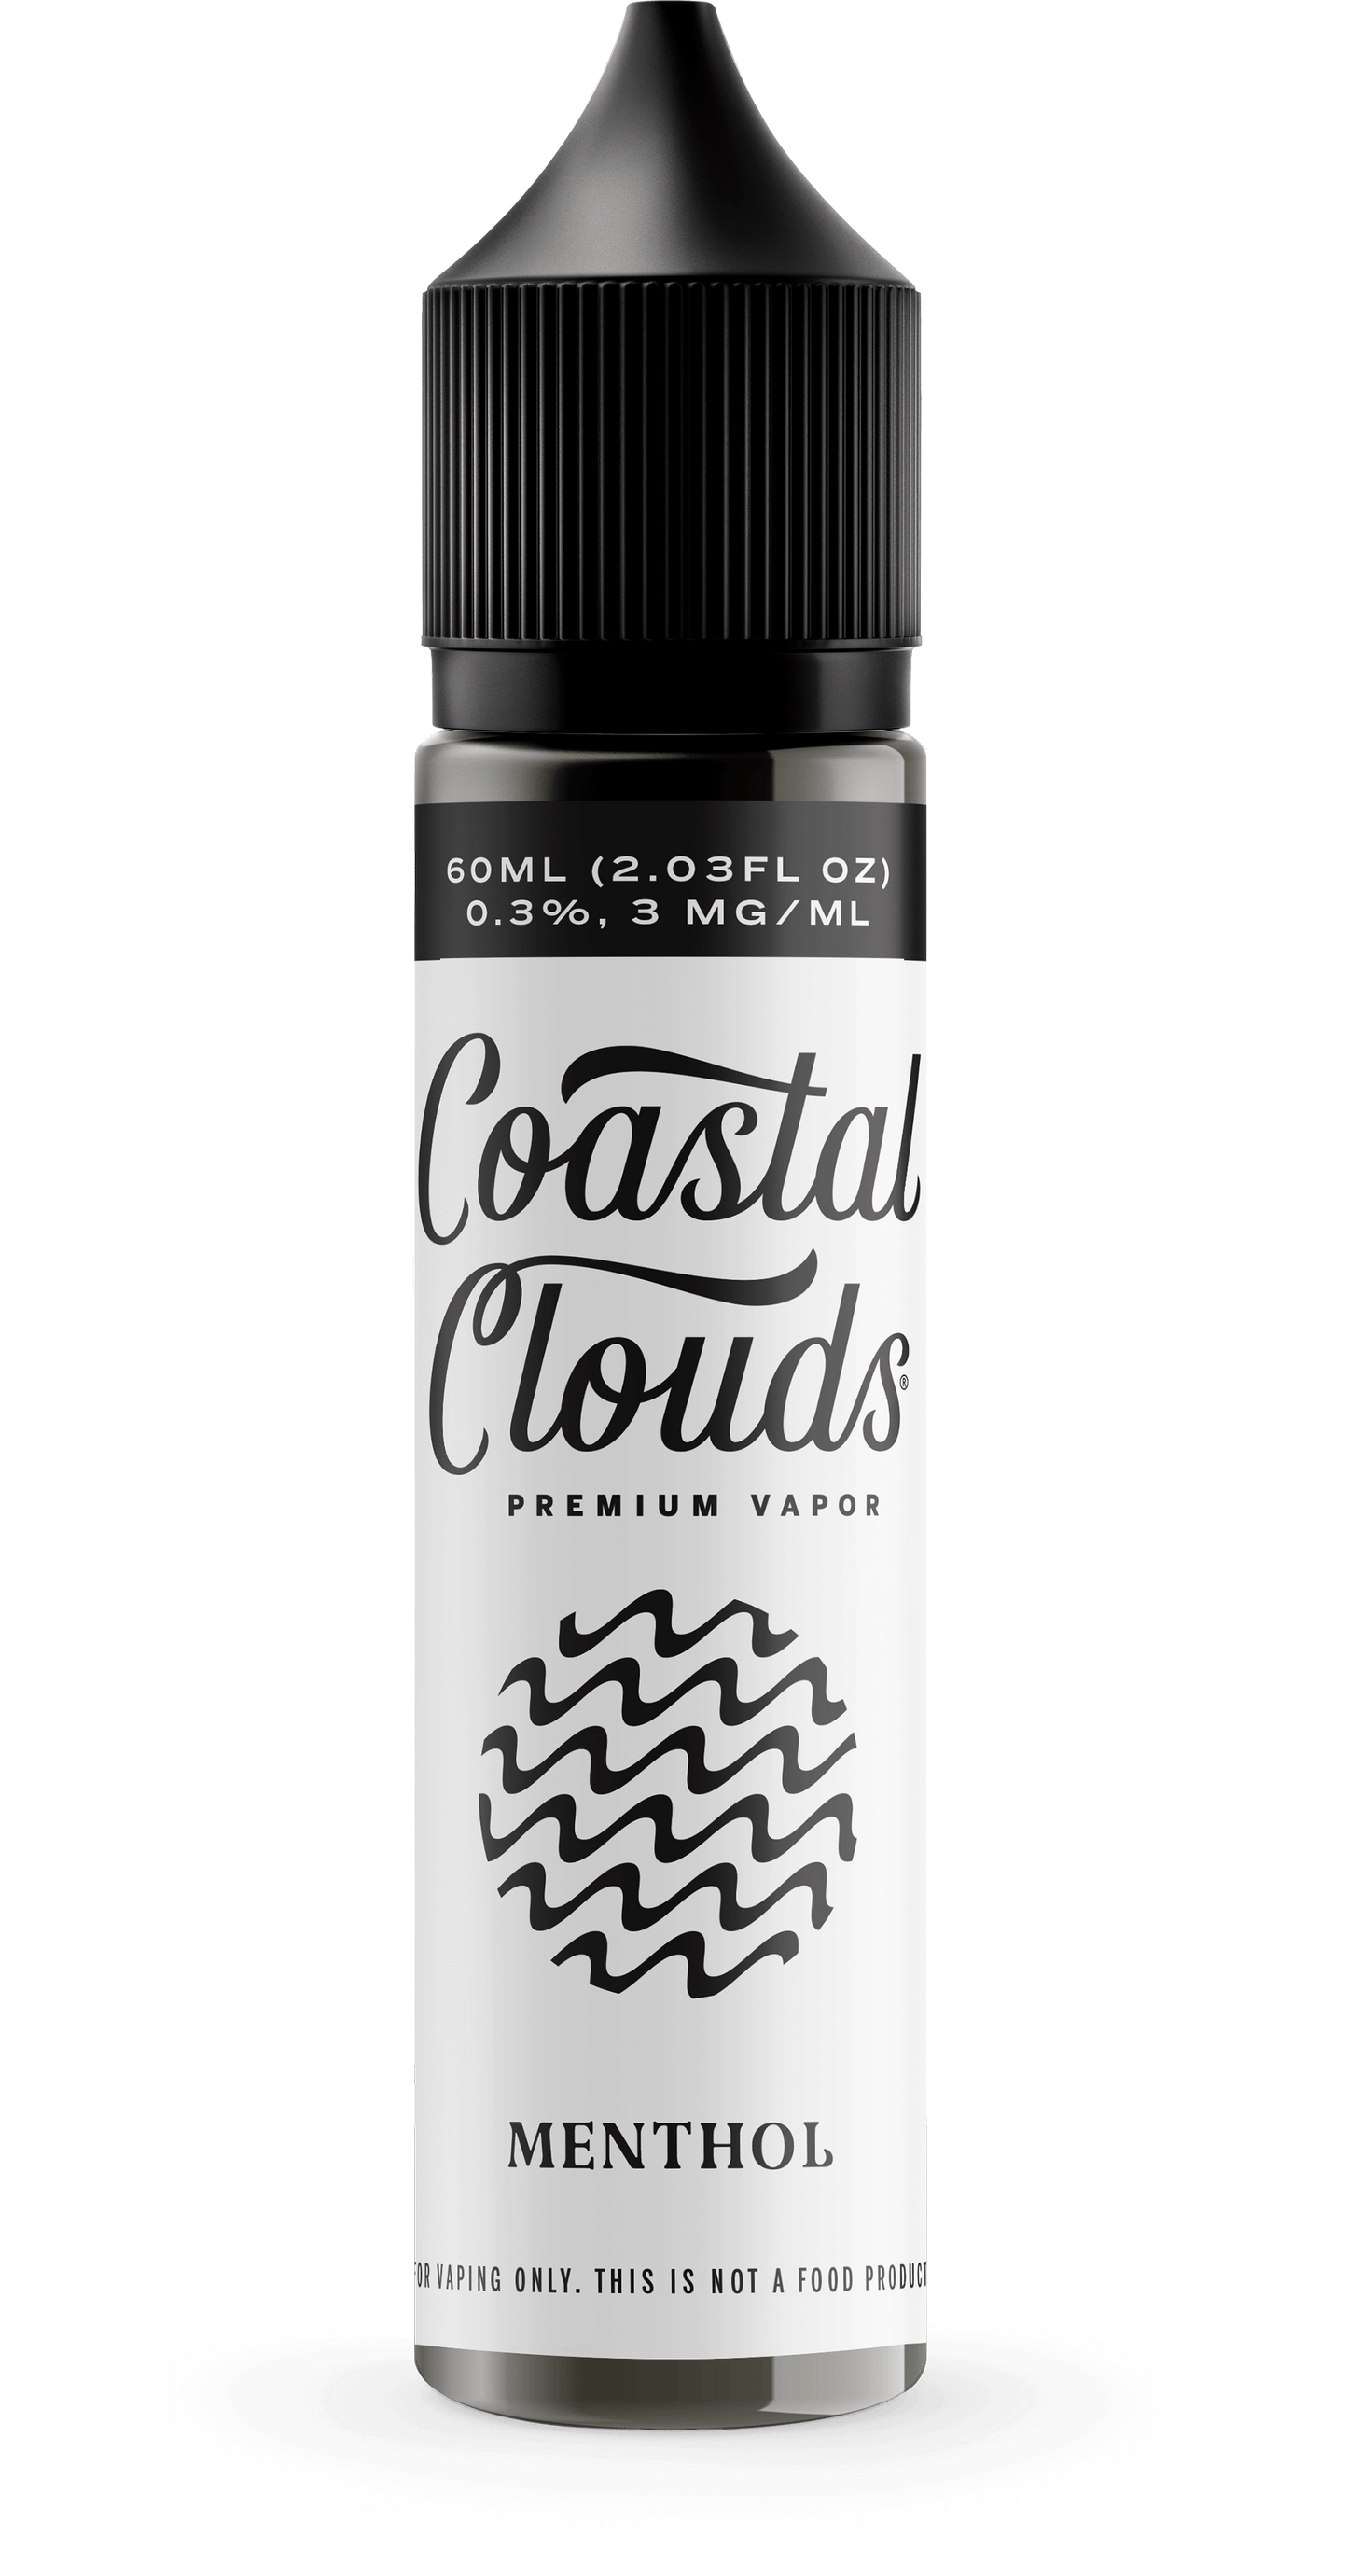 Menthol by Coastal Clouds 60ml bottle